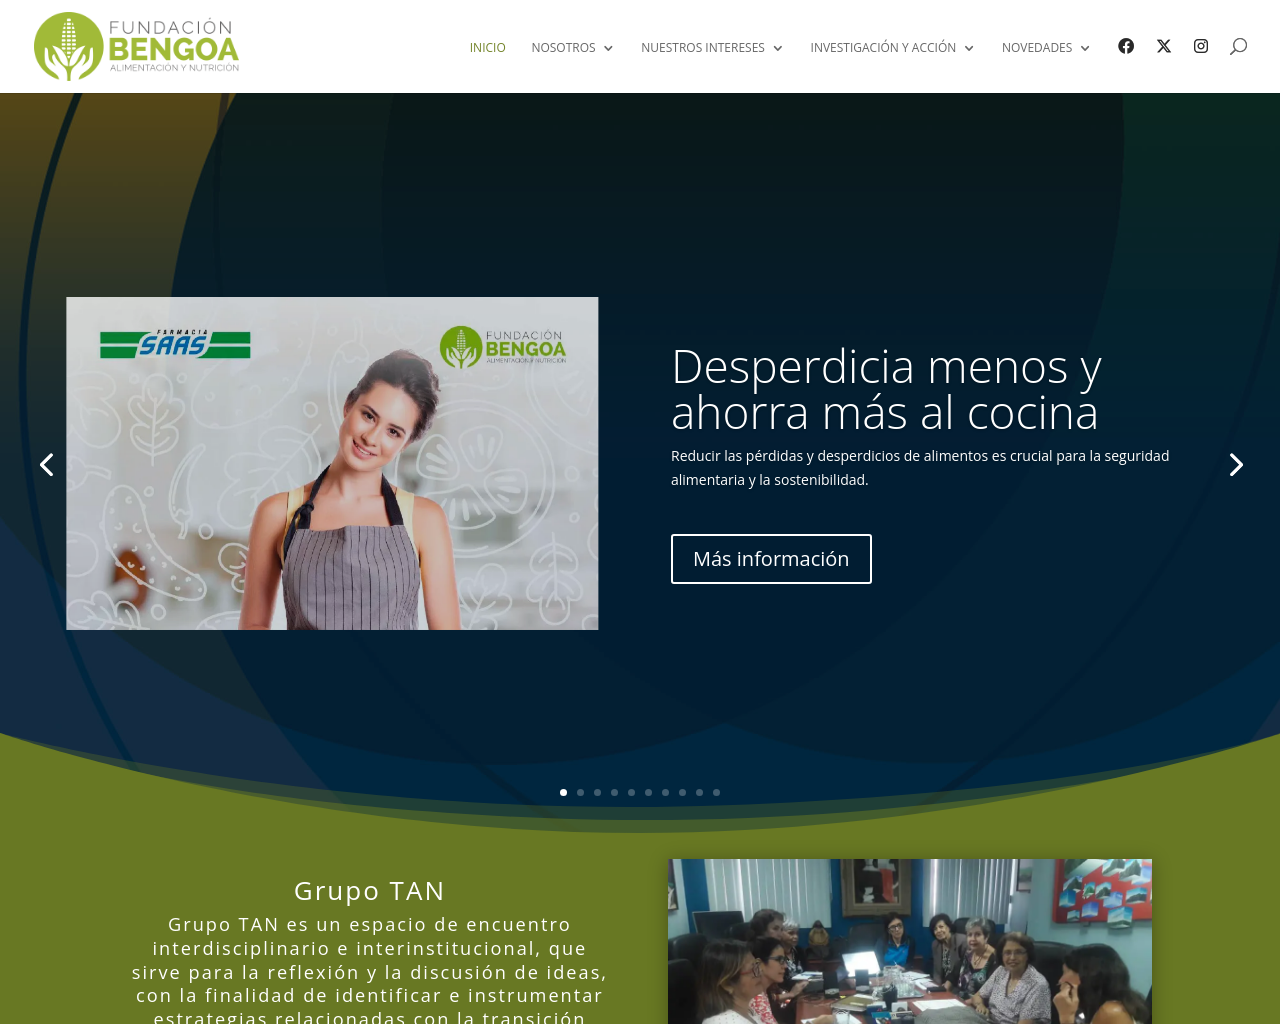 fundacionbengoa.org